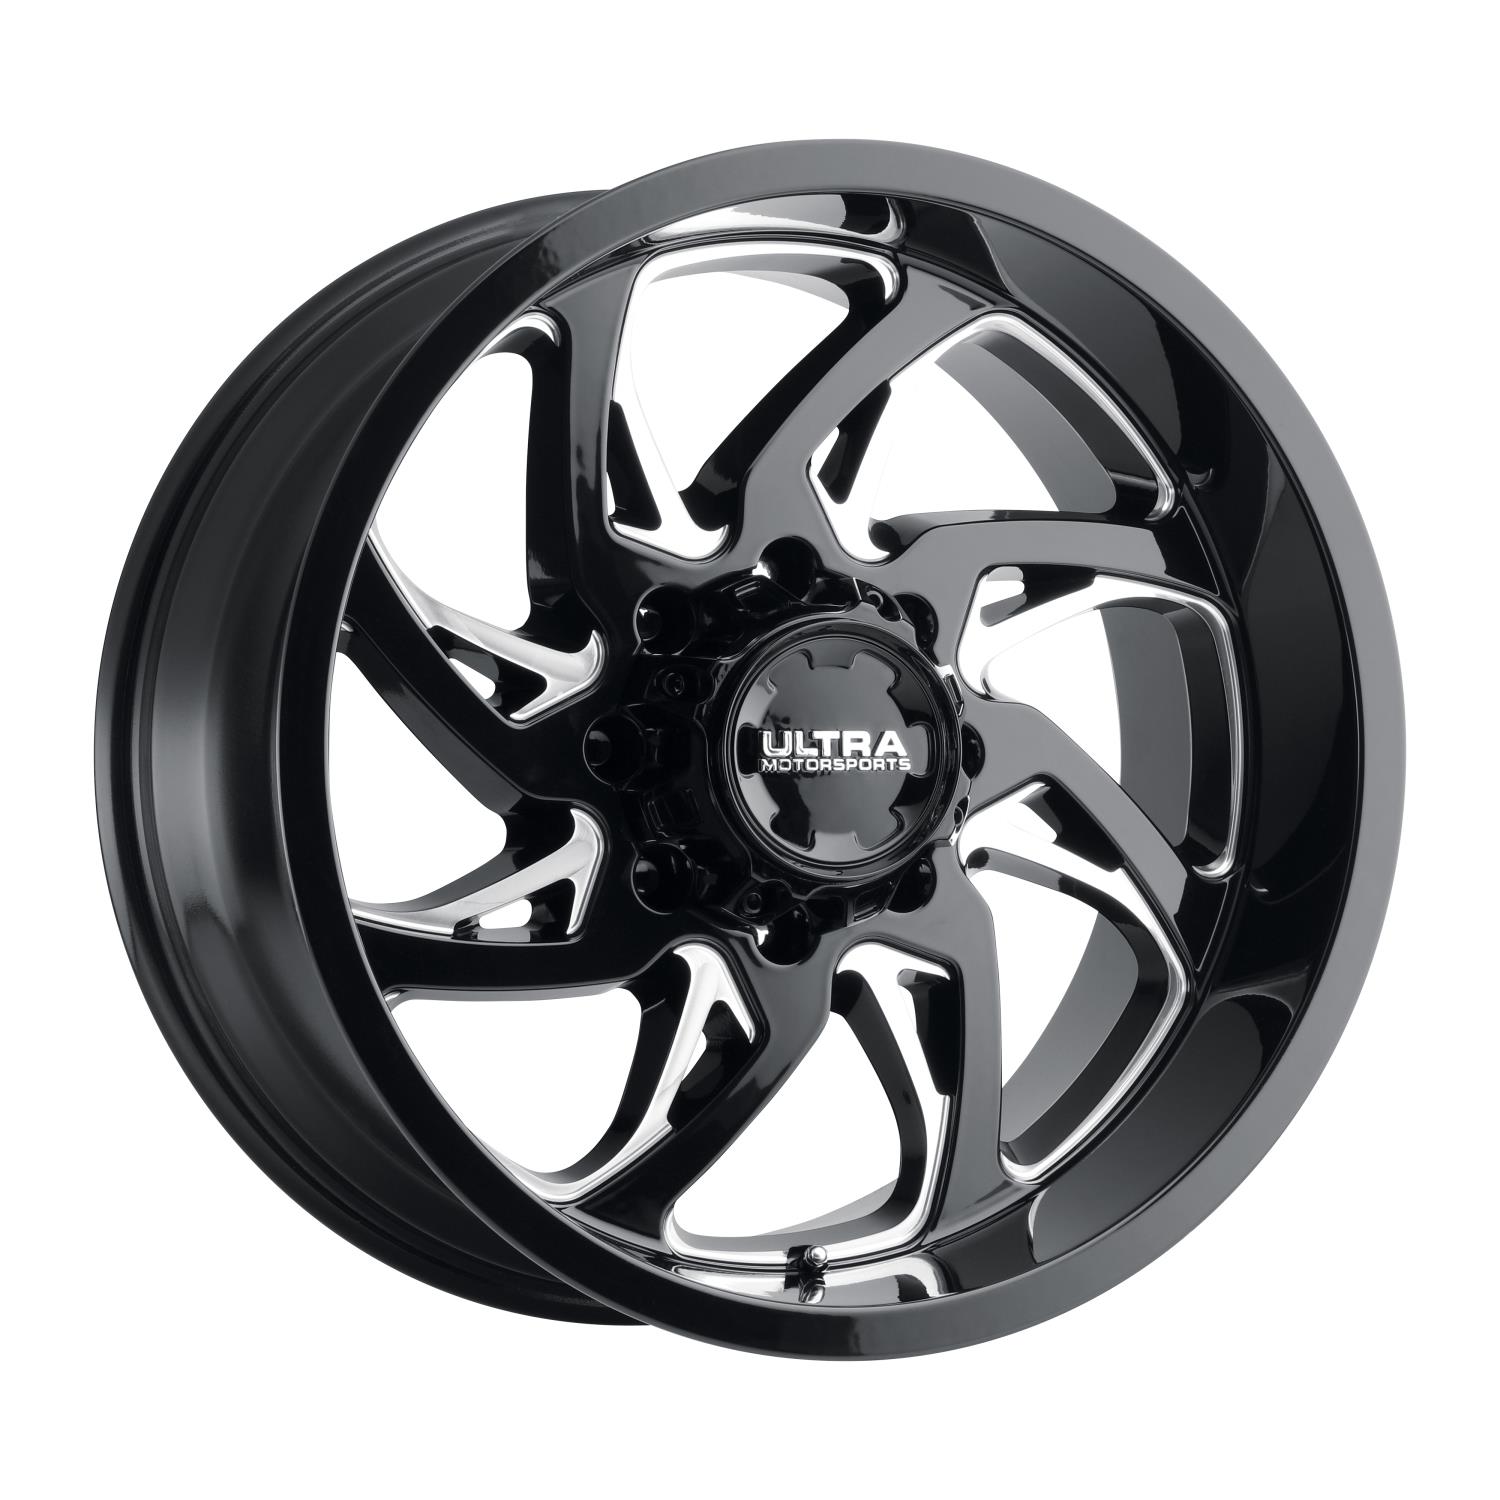 230-Series Villain Wheel, Size: 18x9", Bolt Pattern: 5x5.5"/5x5" [Gloss Black w/Milled Accents]